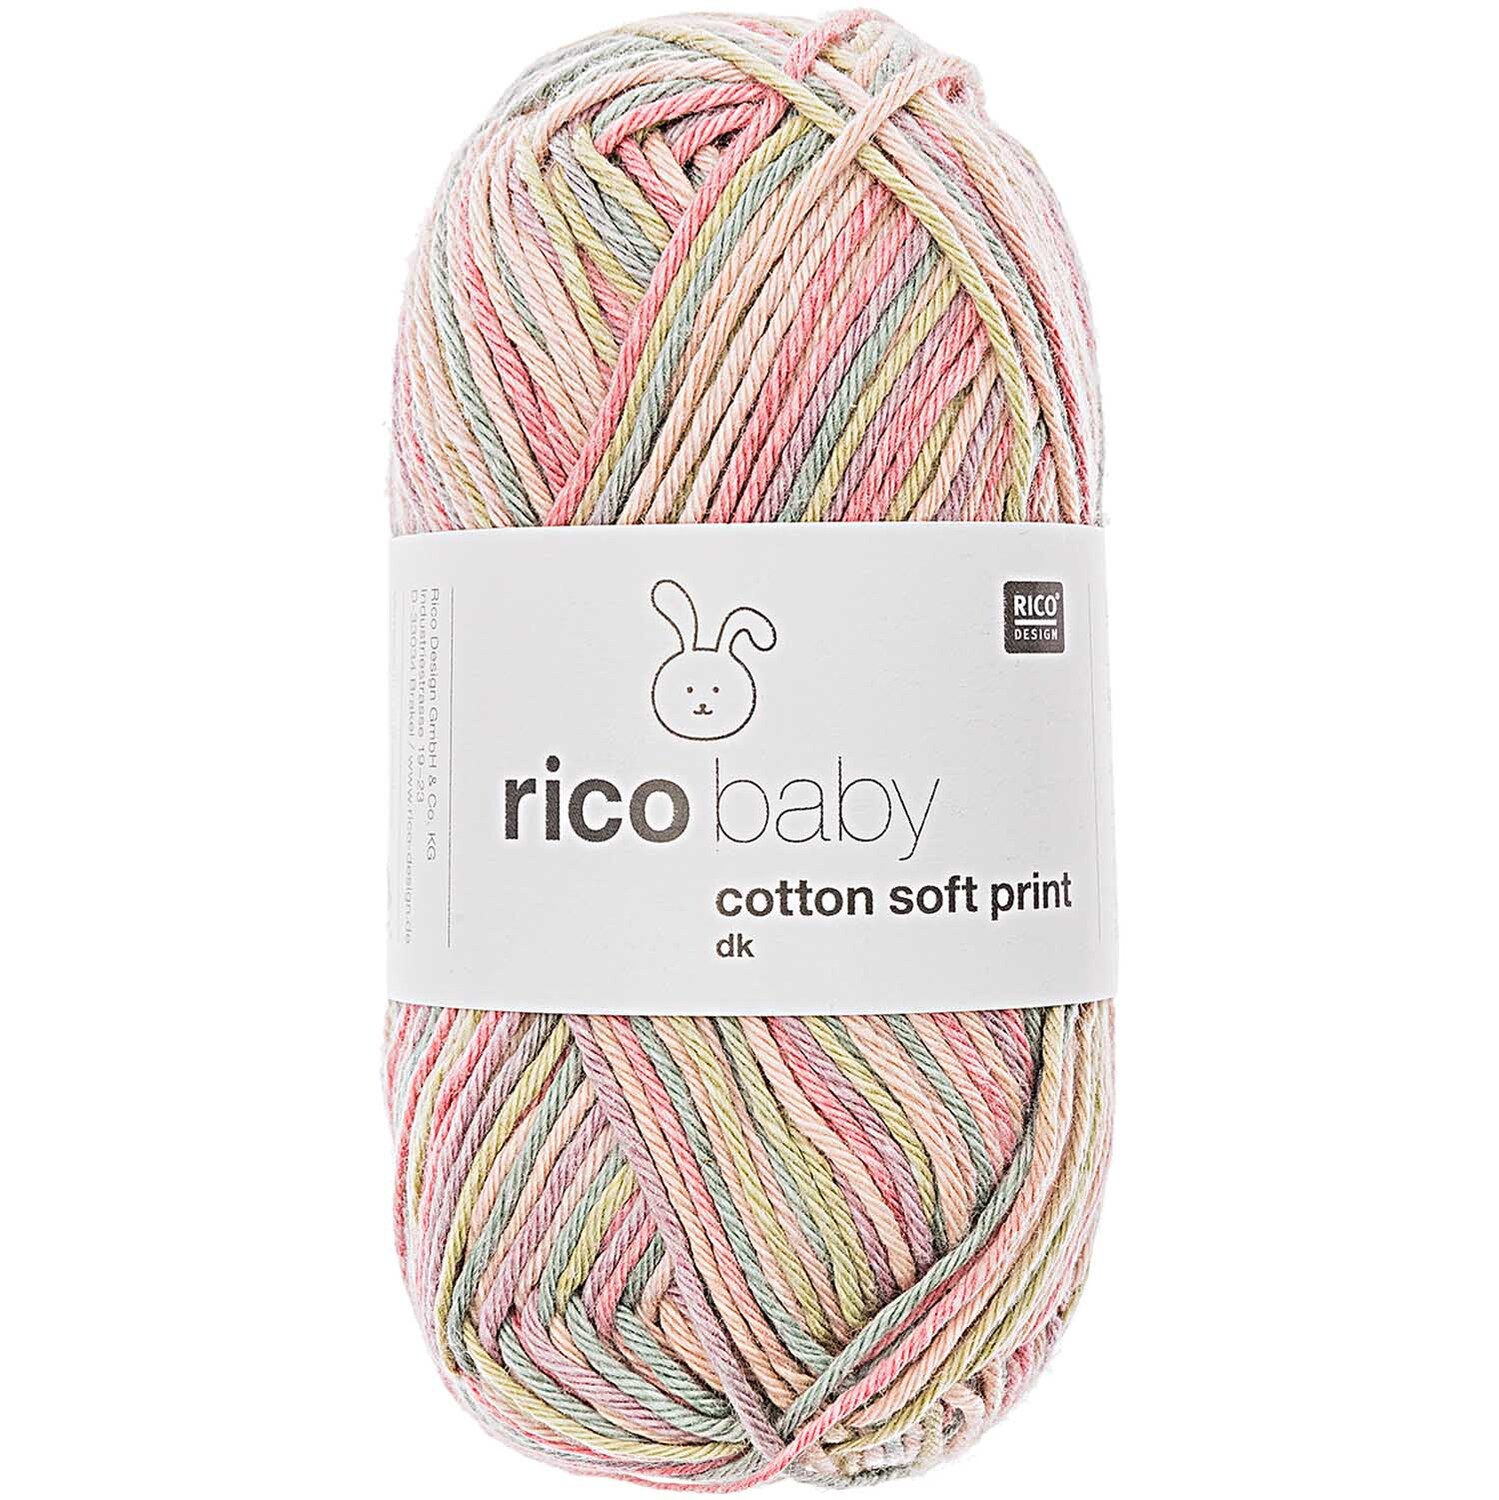 Rico Baby Cotton Soft Print dk